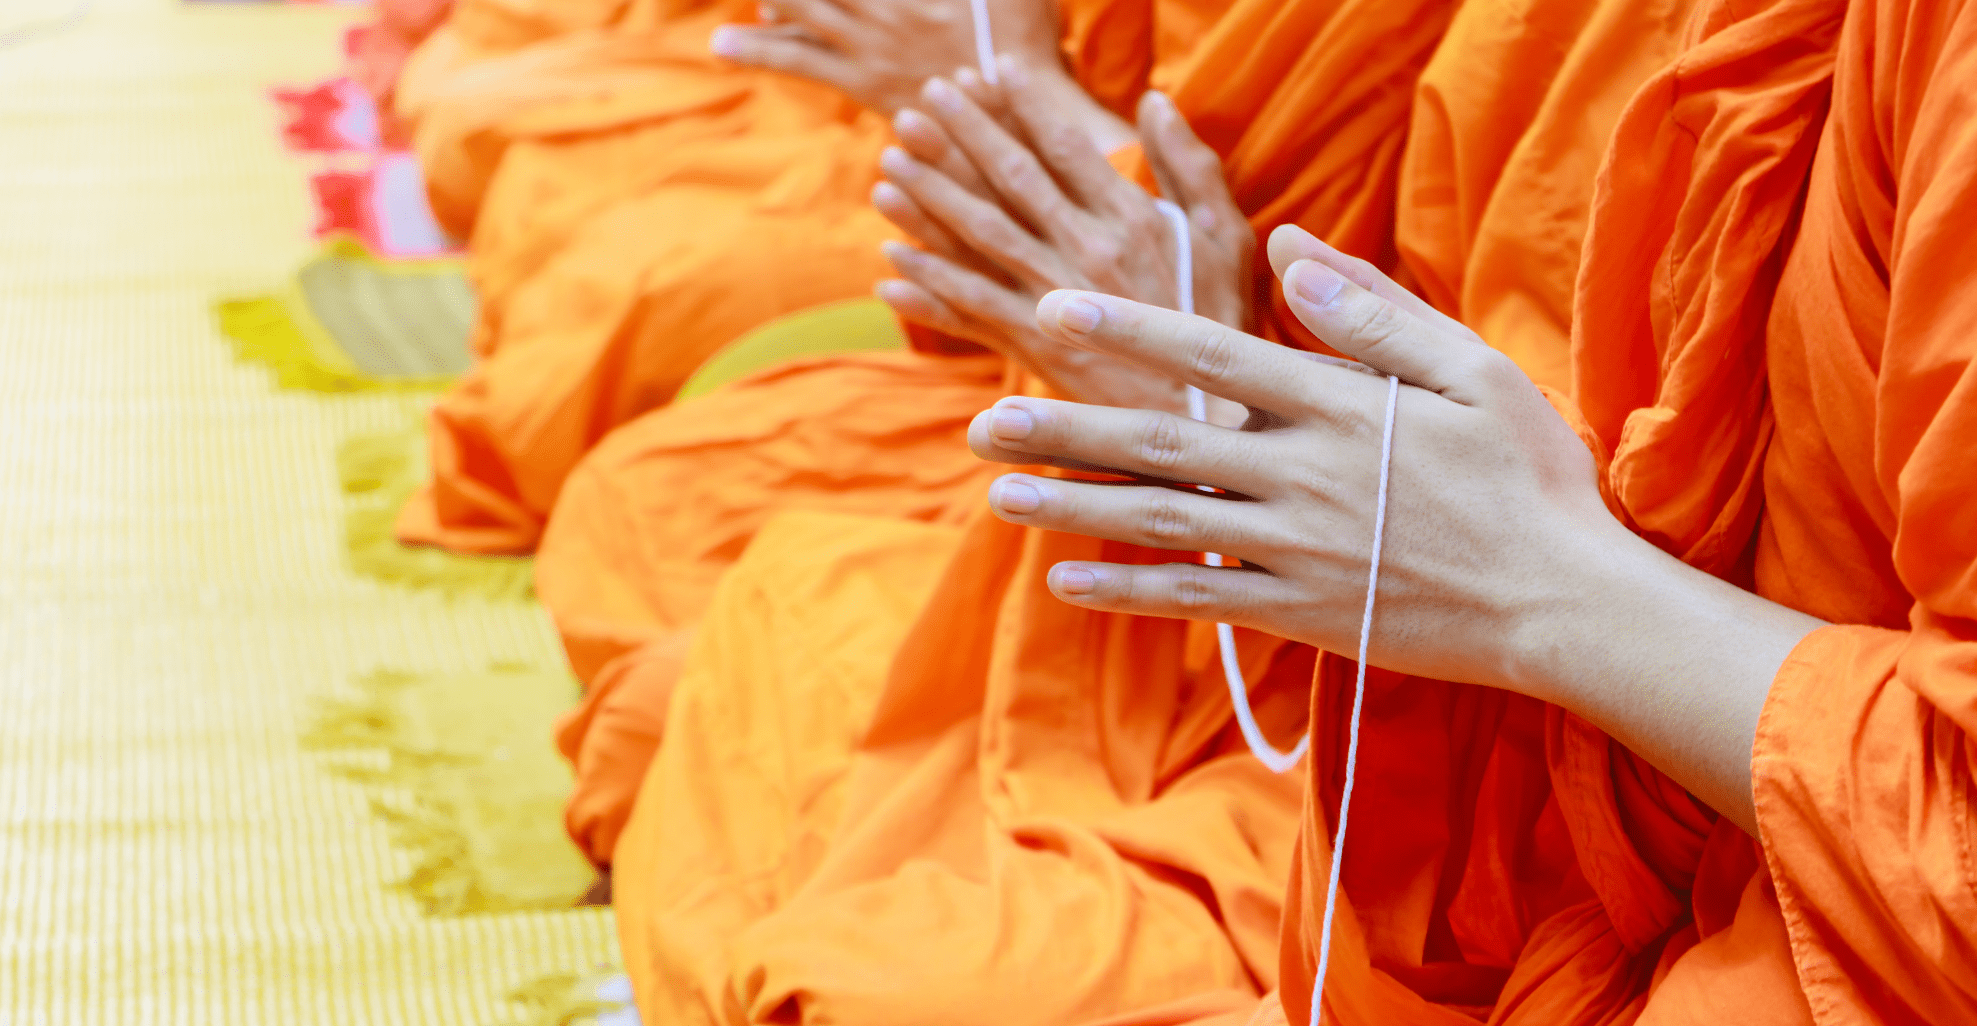 budhizmus